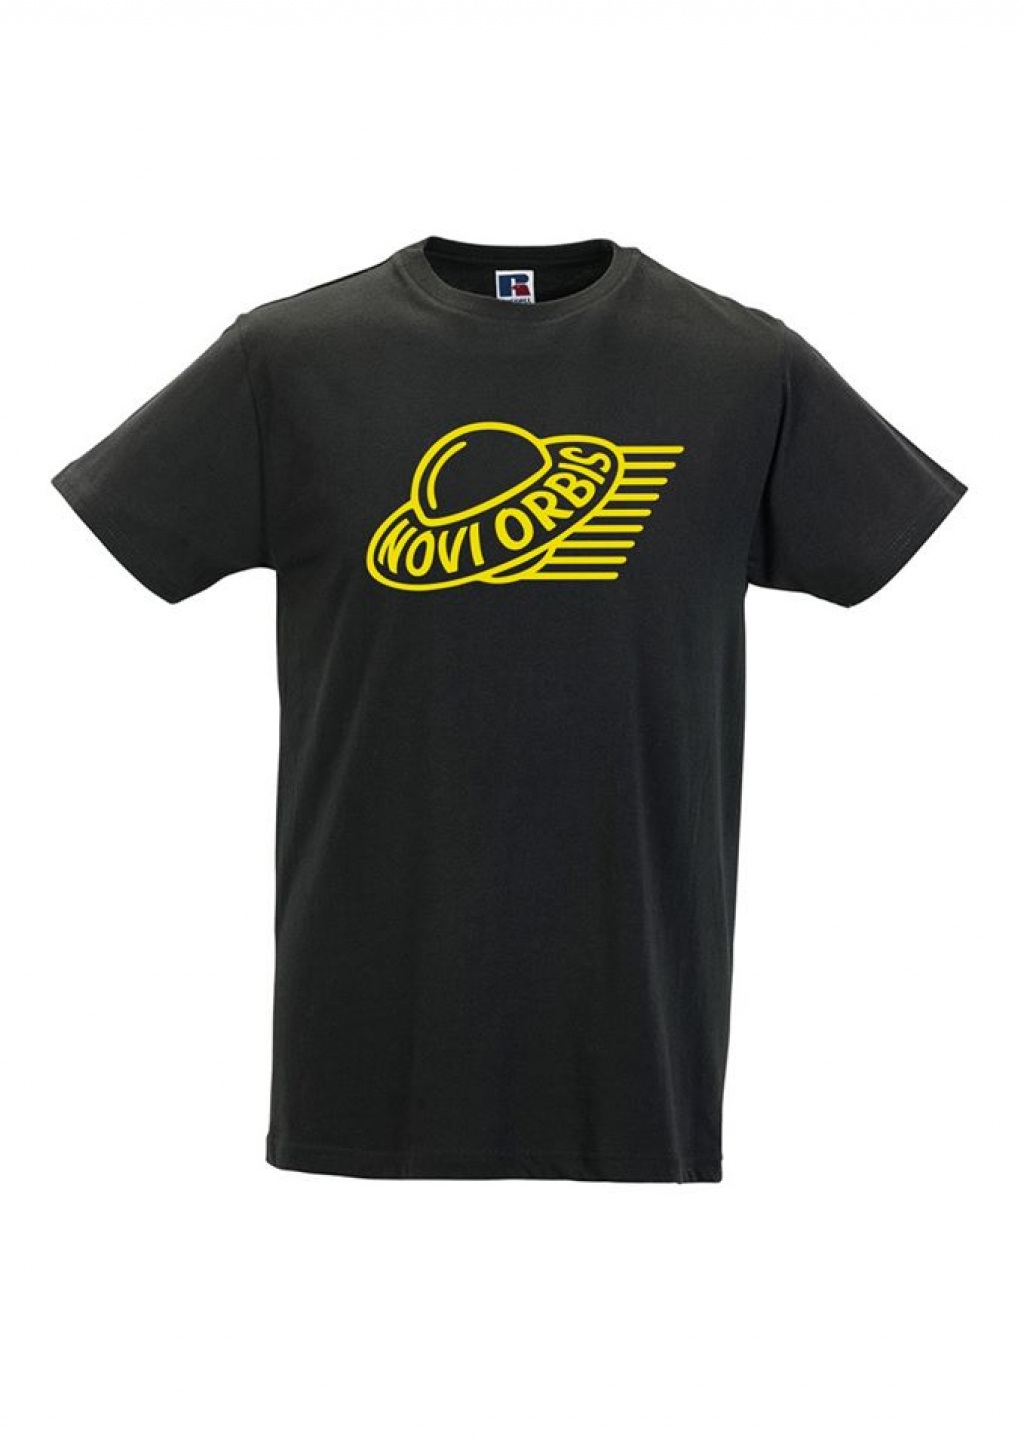 T-Shirt Novi Orbis - Size XXL / RJ155M black with yellow stamp